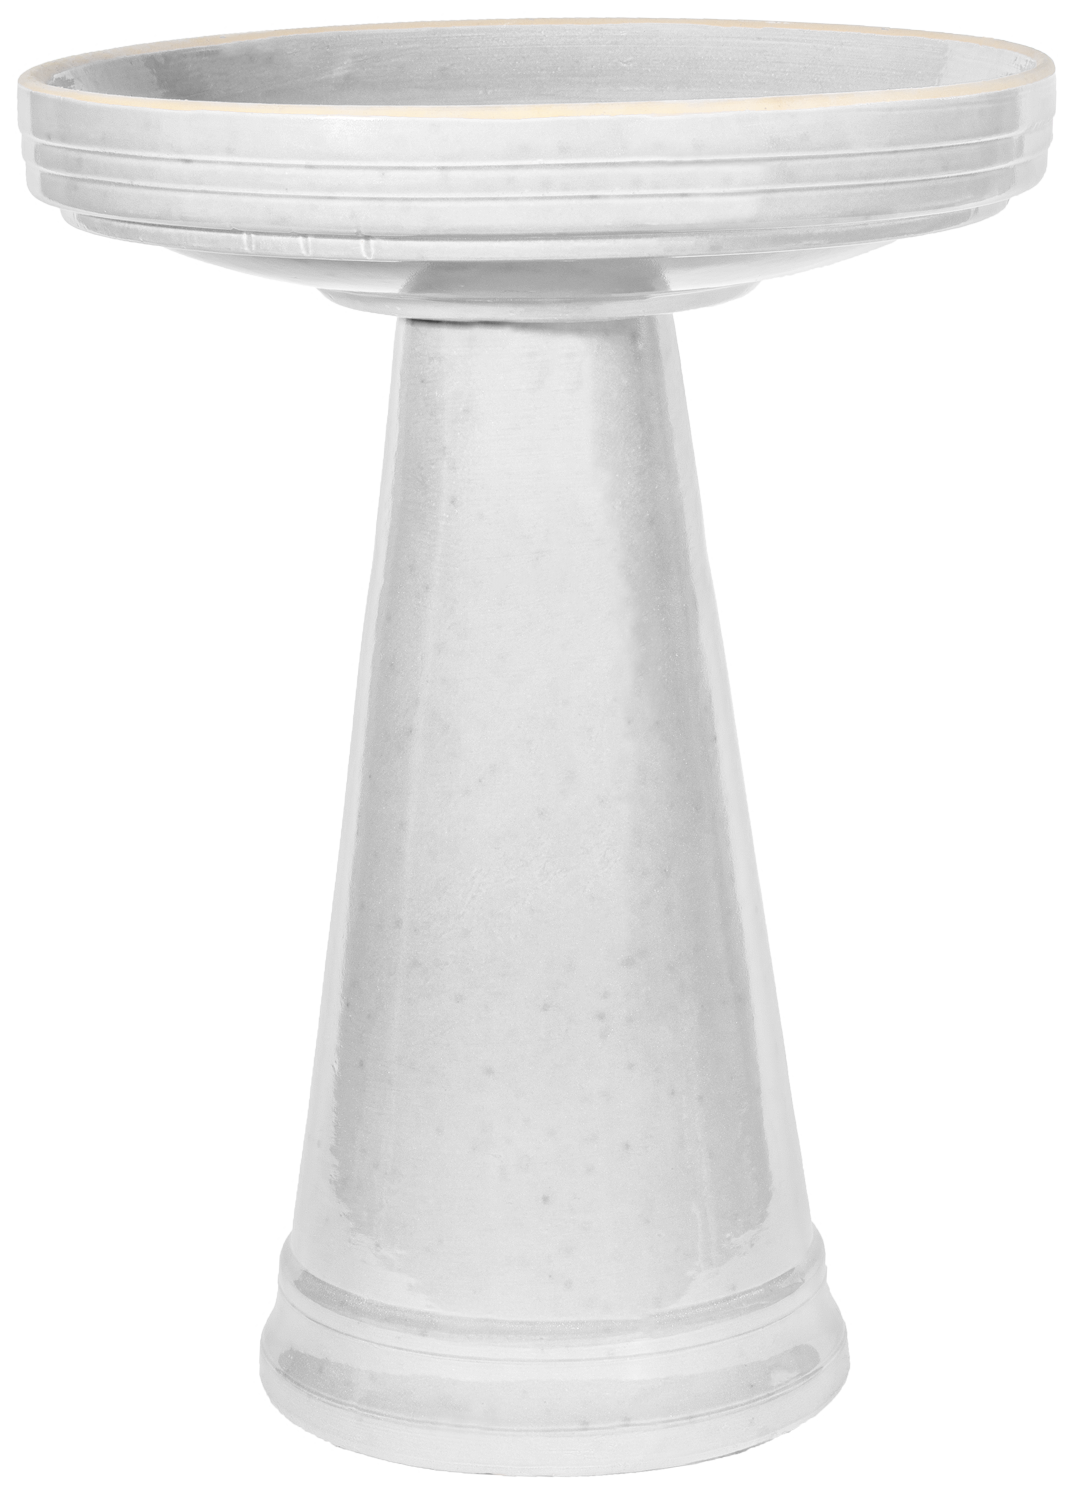 ceramic white birdbath with simple modern smooth design